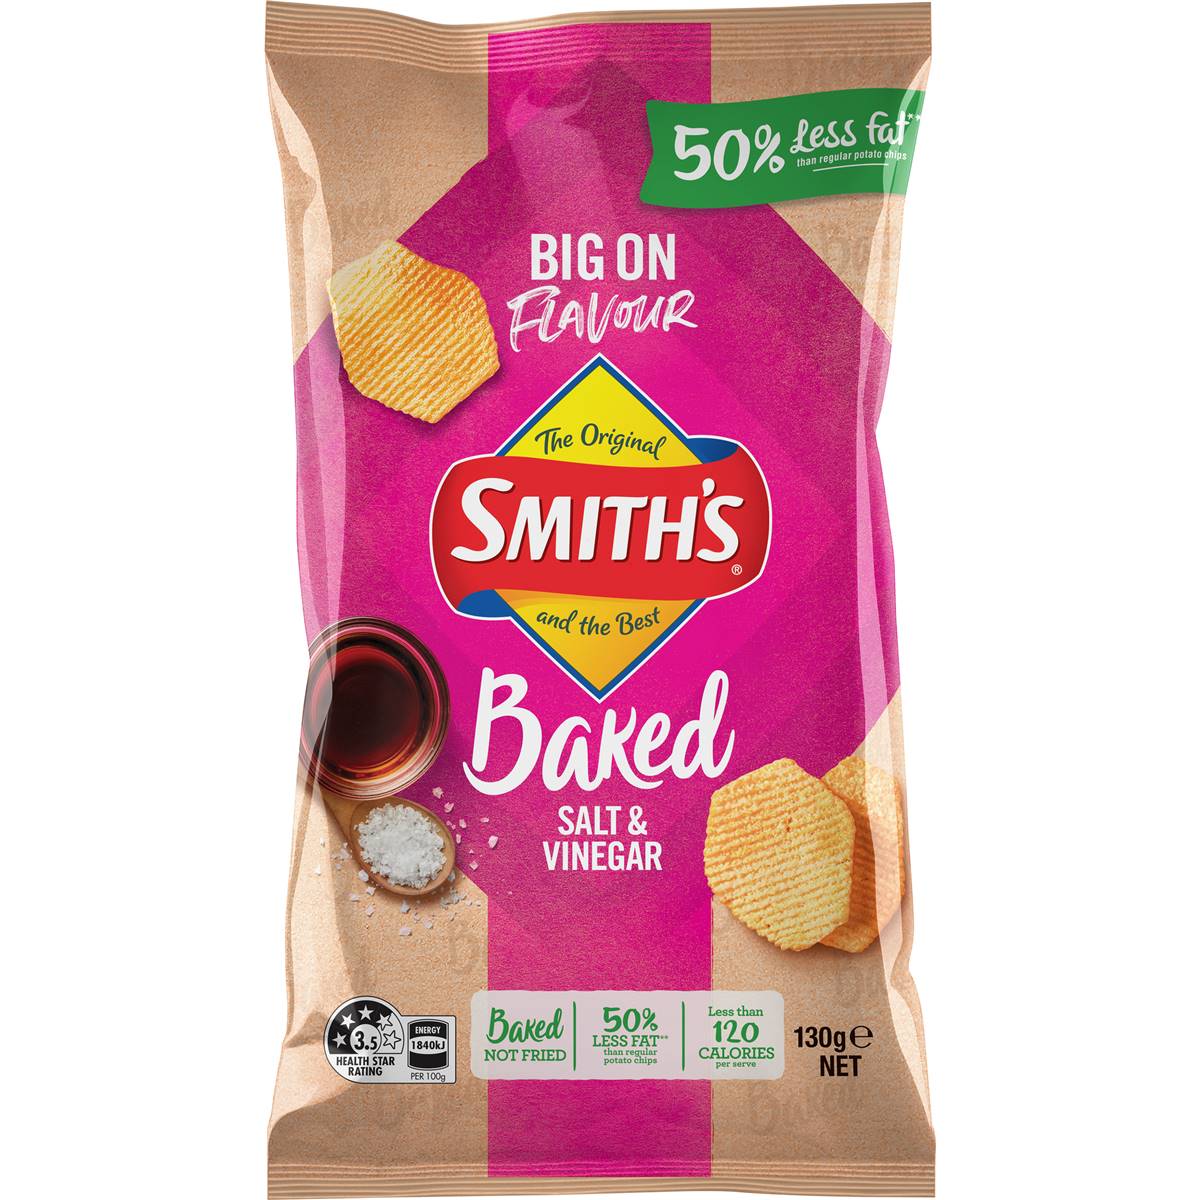 Calories in Smith's Oven Baked Salt & Vinegar Chips